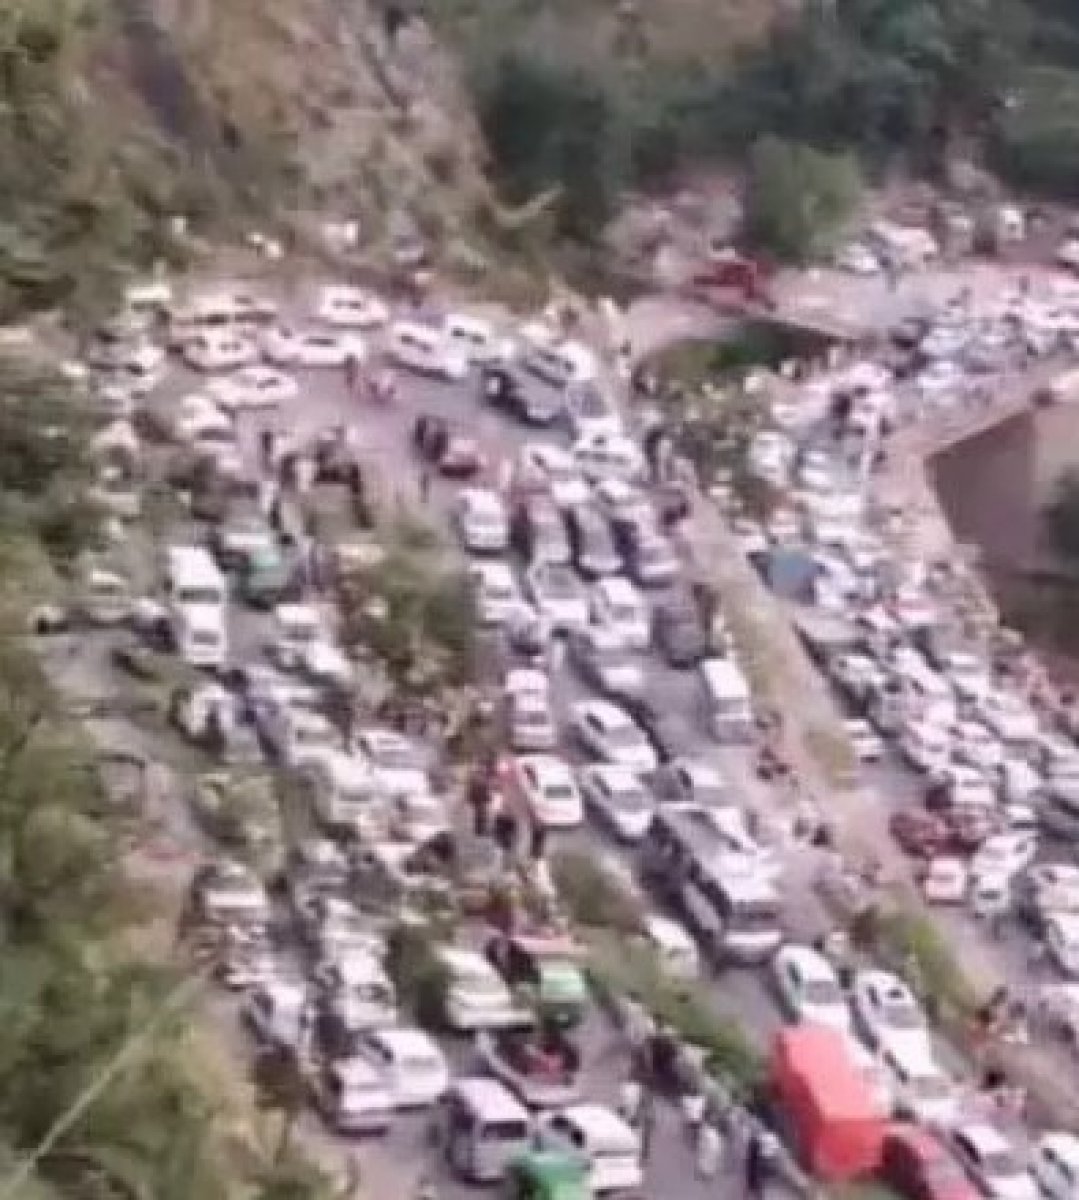 Thousands of kilometers of queues in Pakistan #2